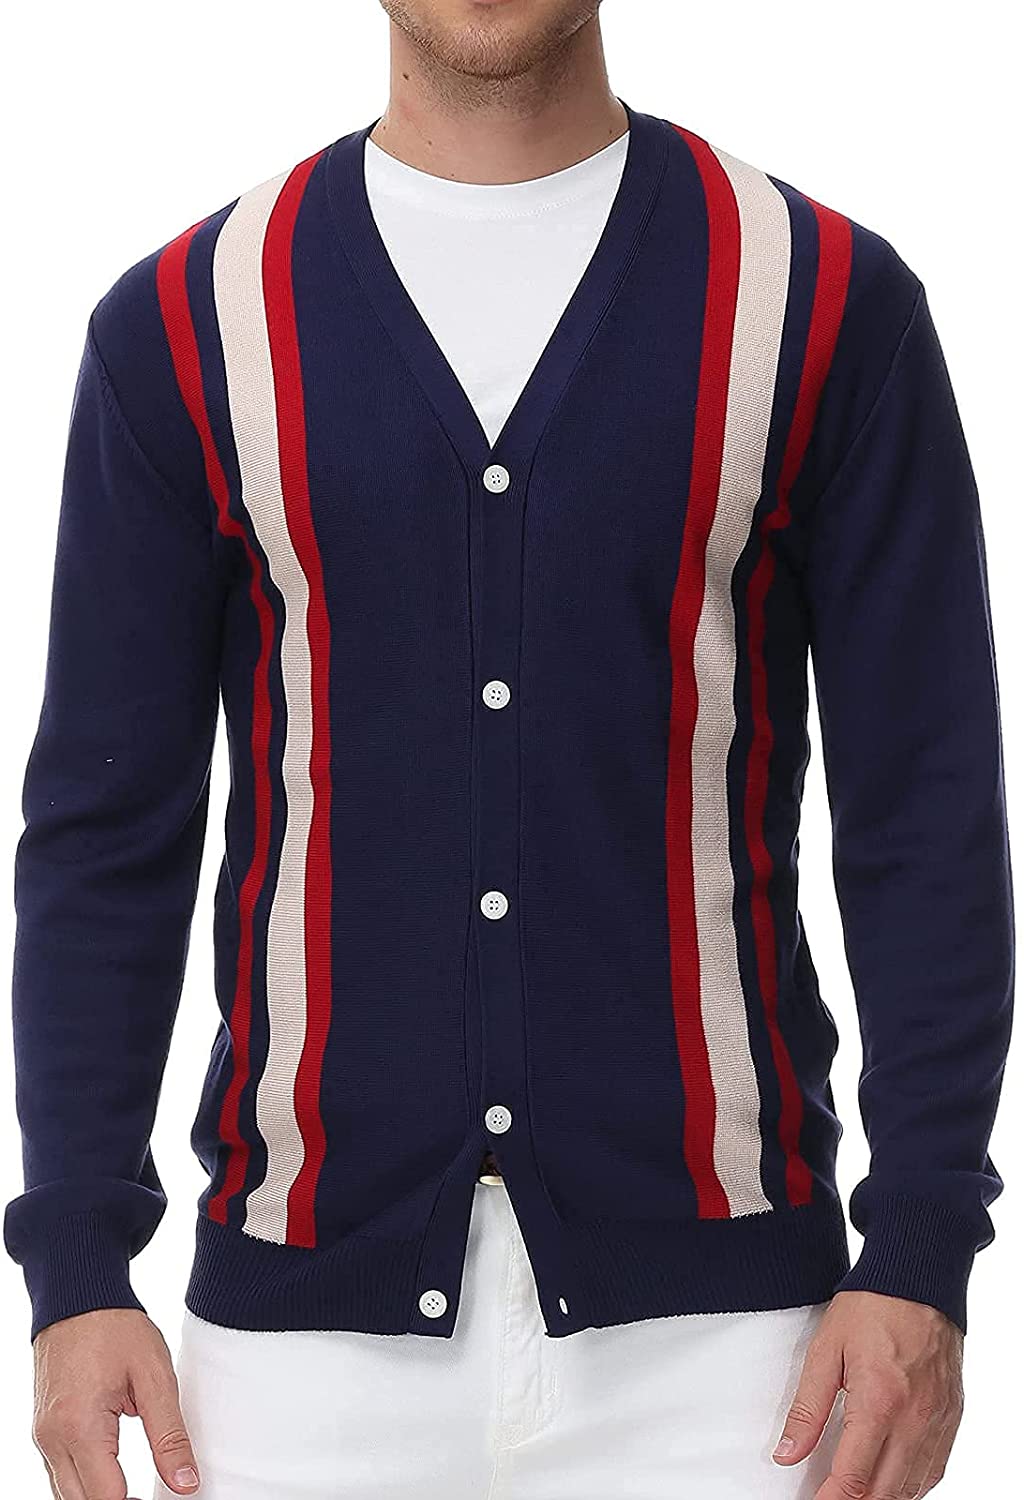 Men's Royal Blue Long Sleeve Vintage Stripes Cardigan Sweater Button Down V-Neck Knitwear